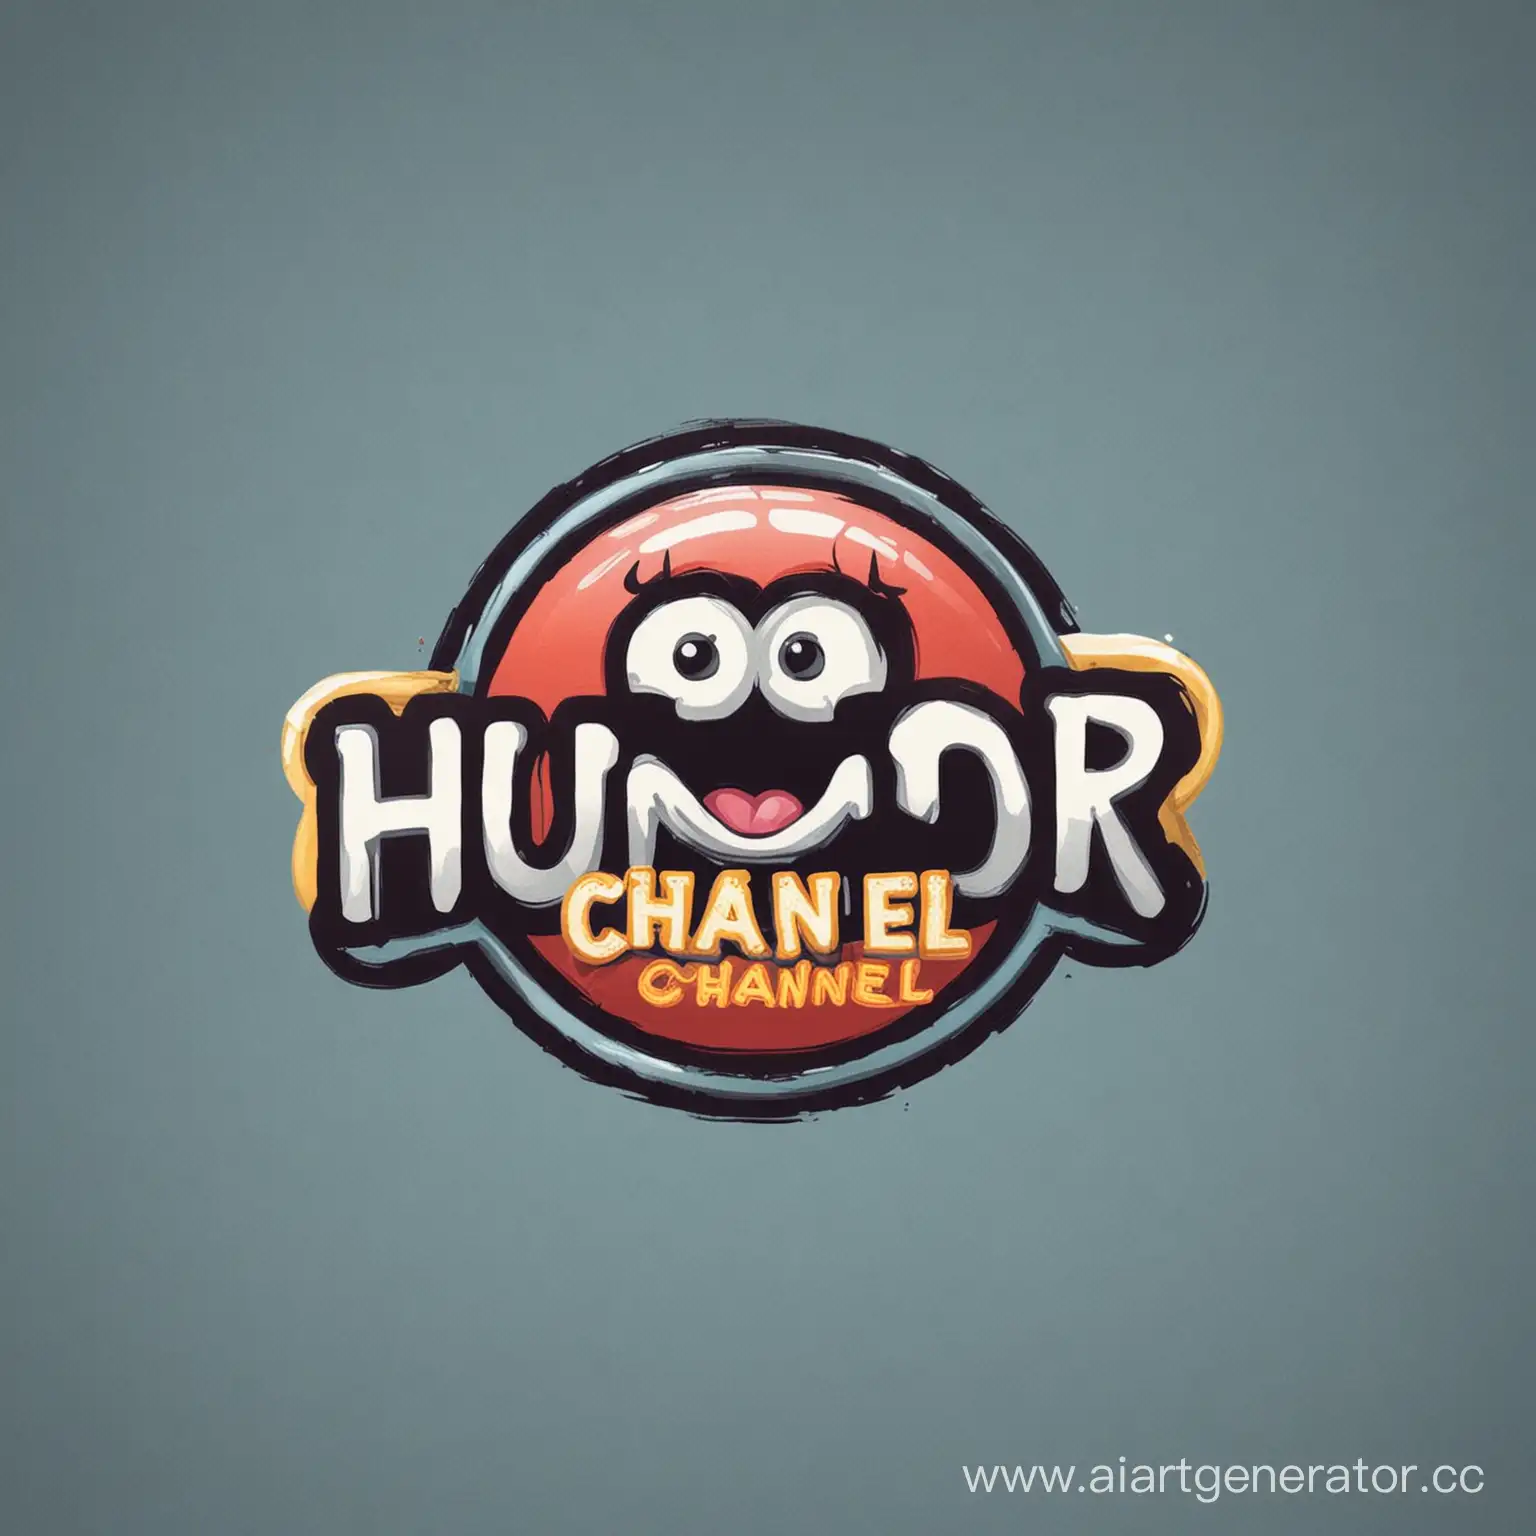 Funny-Mascot-Cartoon-Character-Humor-Channel-Branding